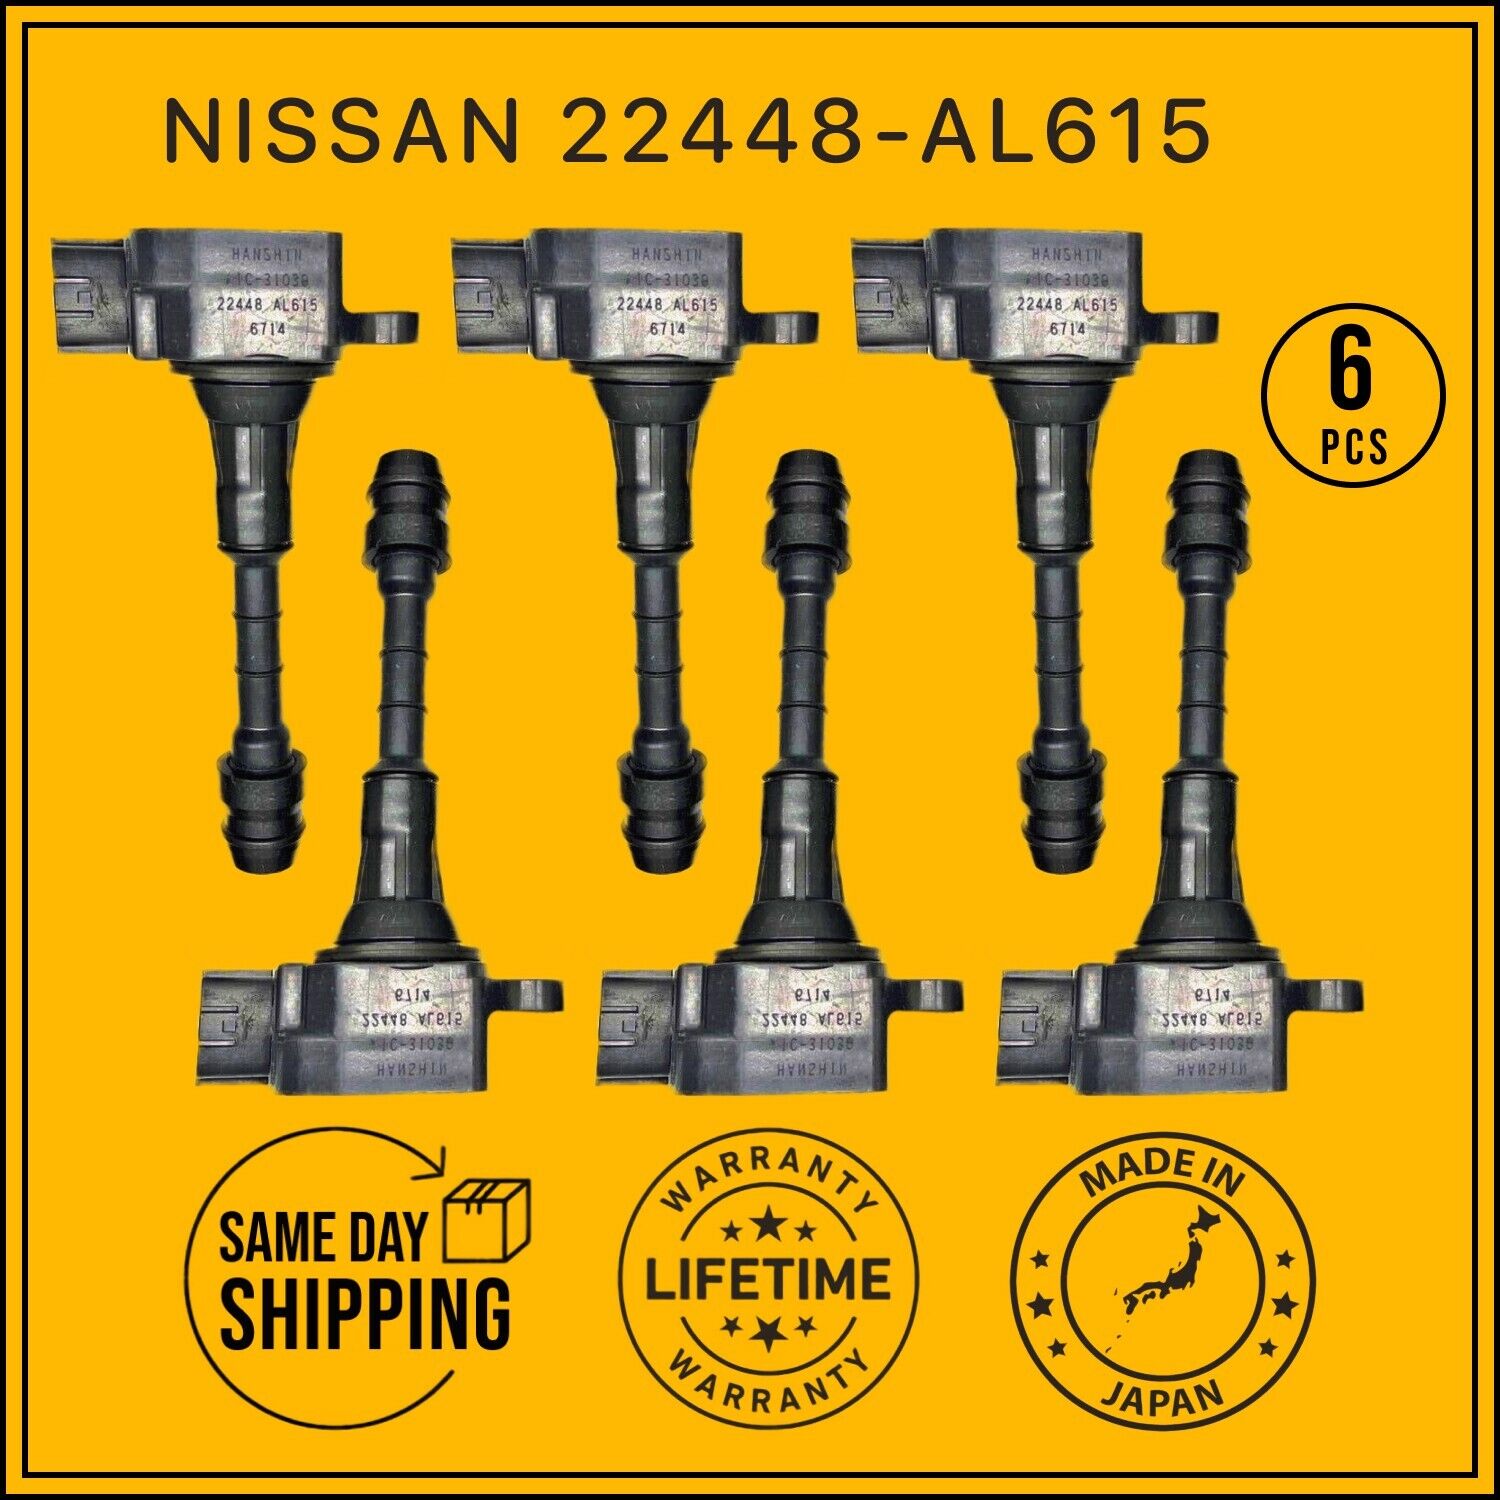 22448-AL615 GENUINE Nissan Ignition Coils For 2003-2008 Nissan 350Z FX35, 6PCS